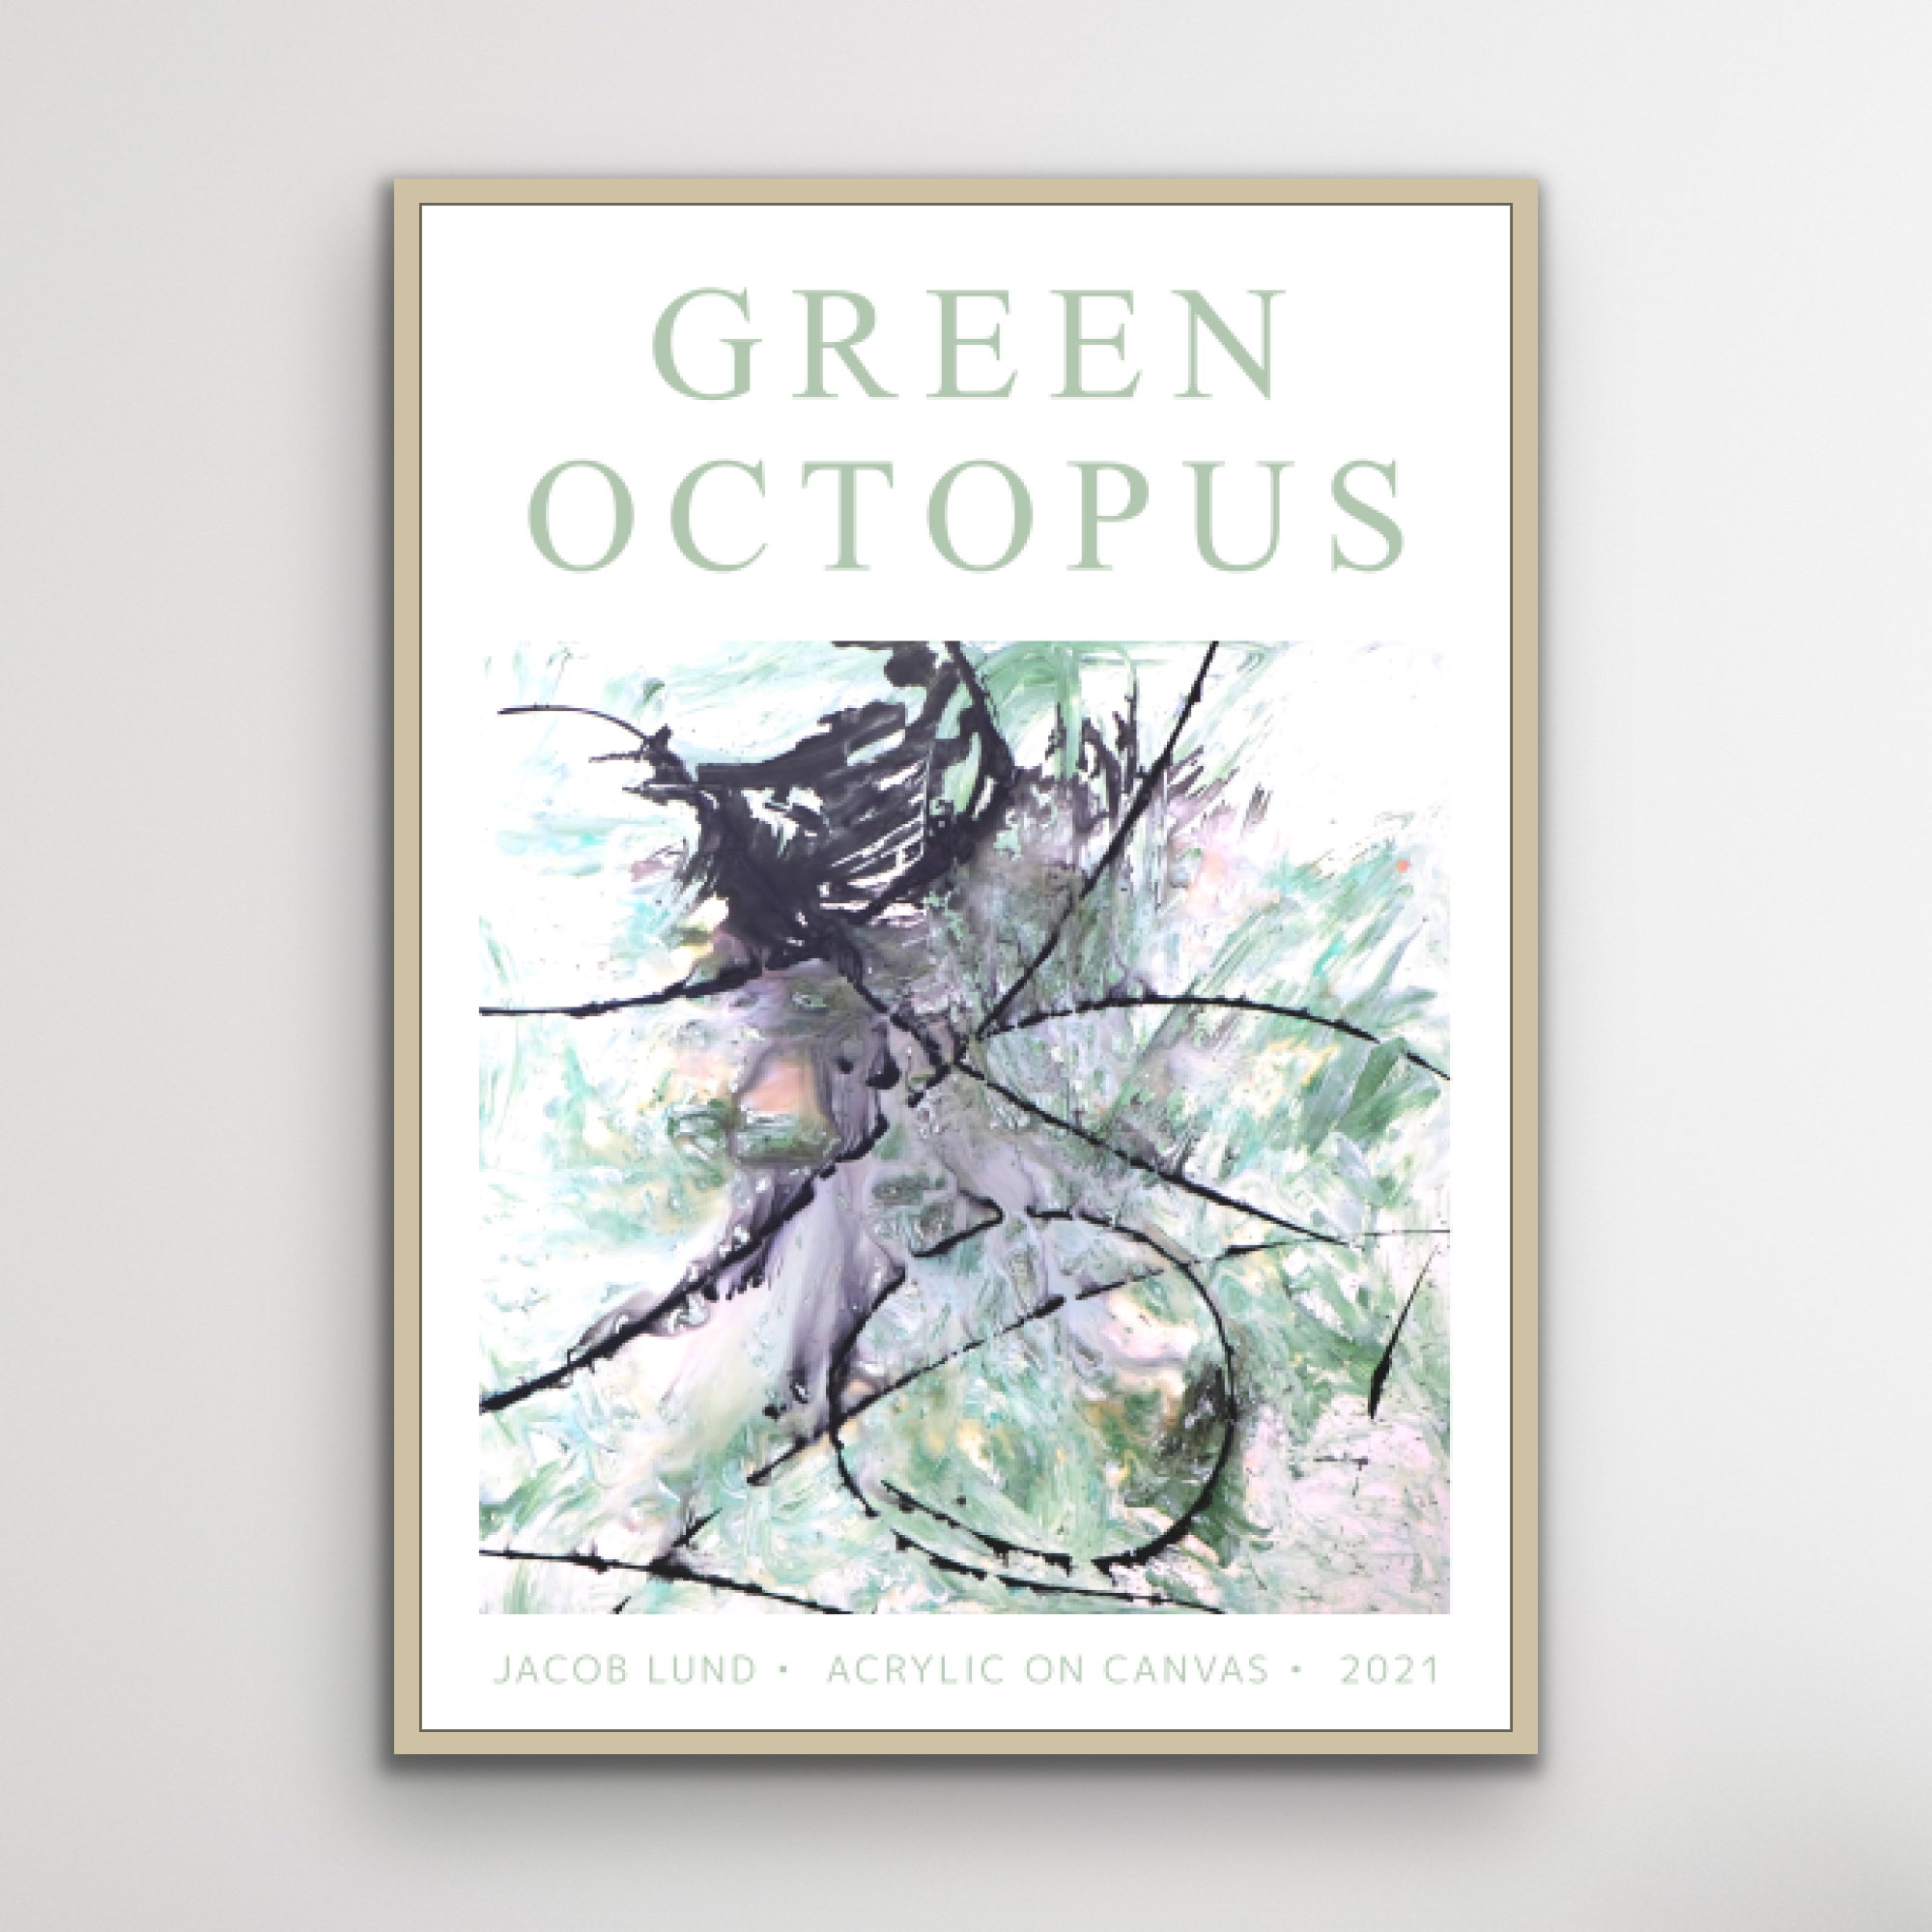 Poster: "Green Octopus"